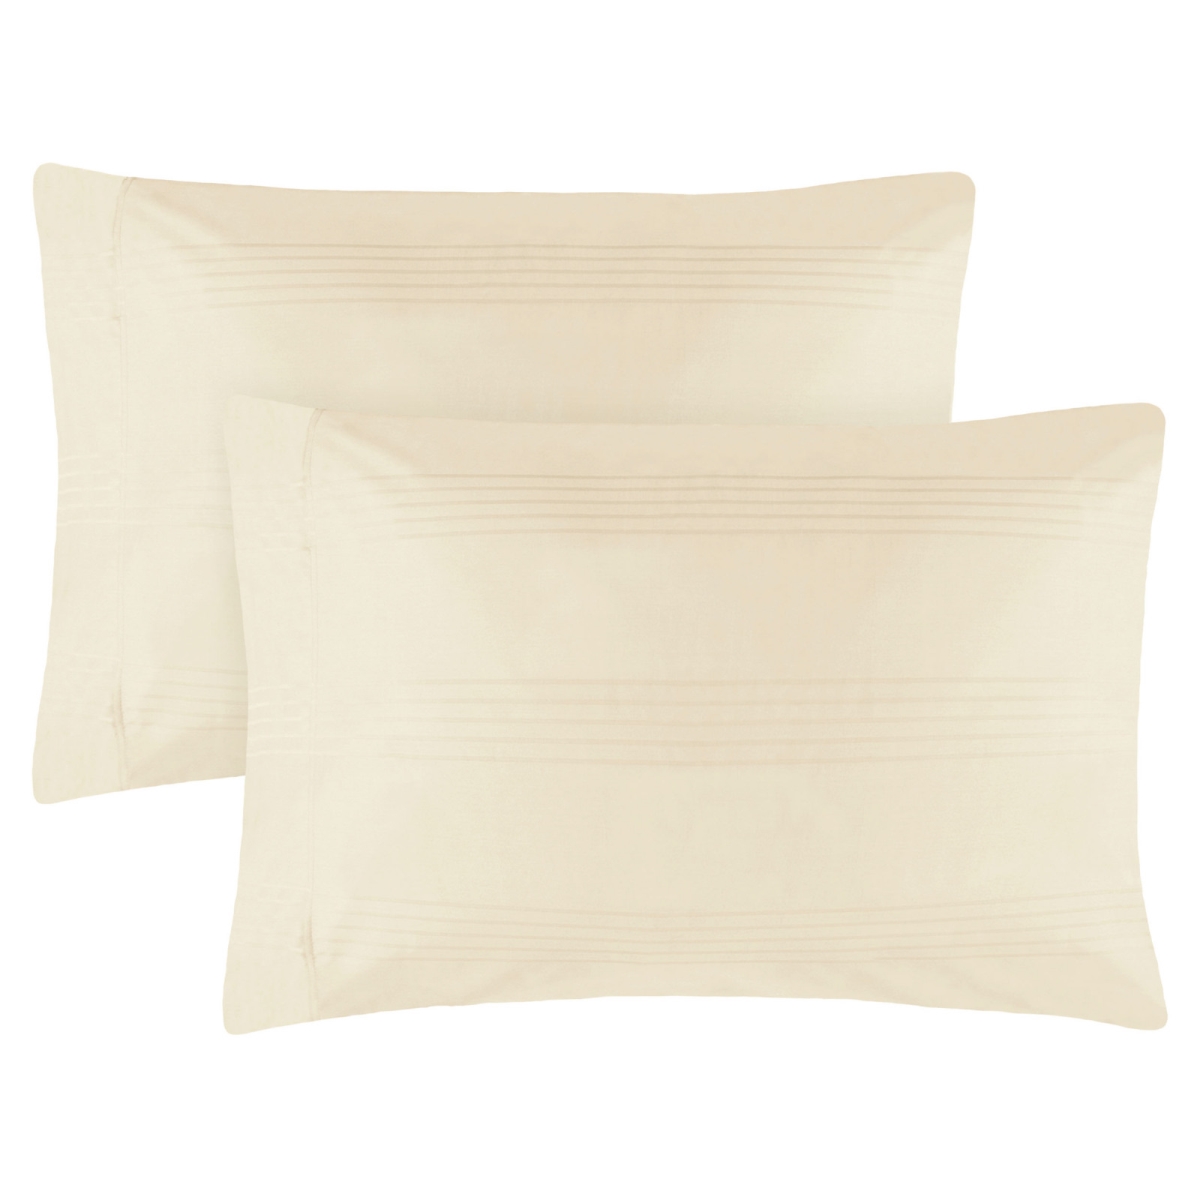 Yms008219 Premium 420 Thread Count 100 Percent Cotton Pillowcase Set, Ivory - King - 2 Piece